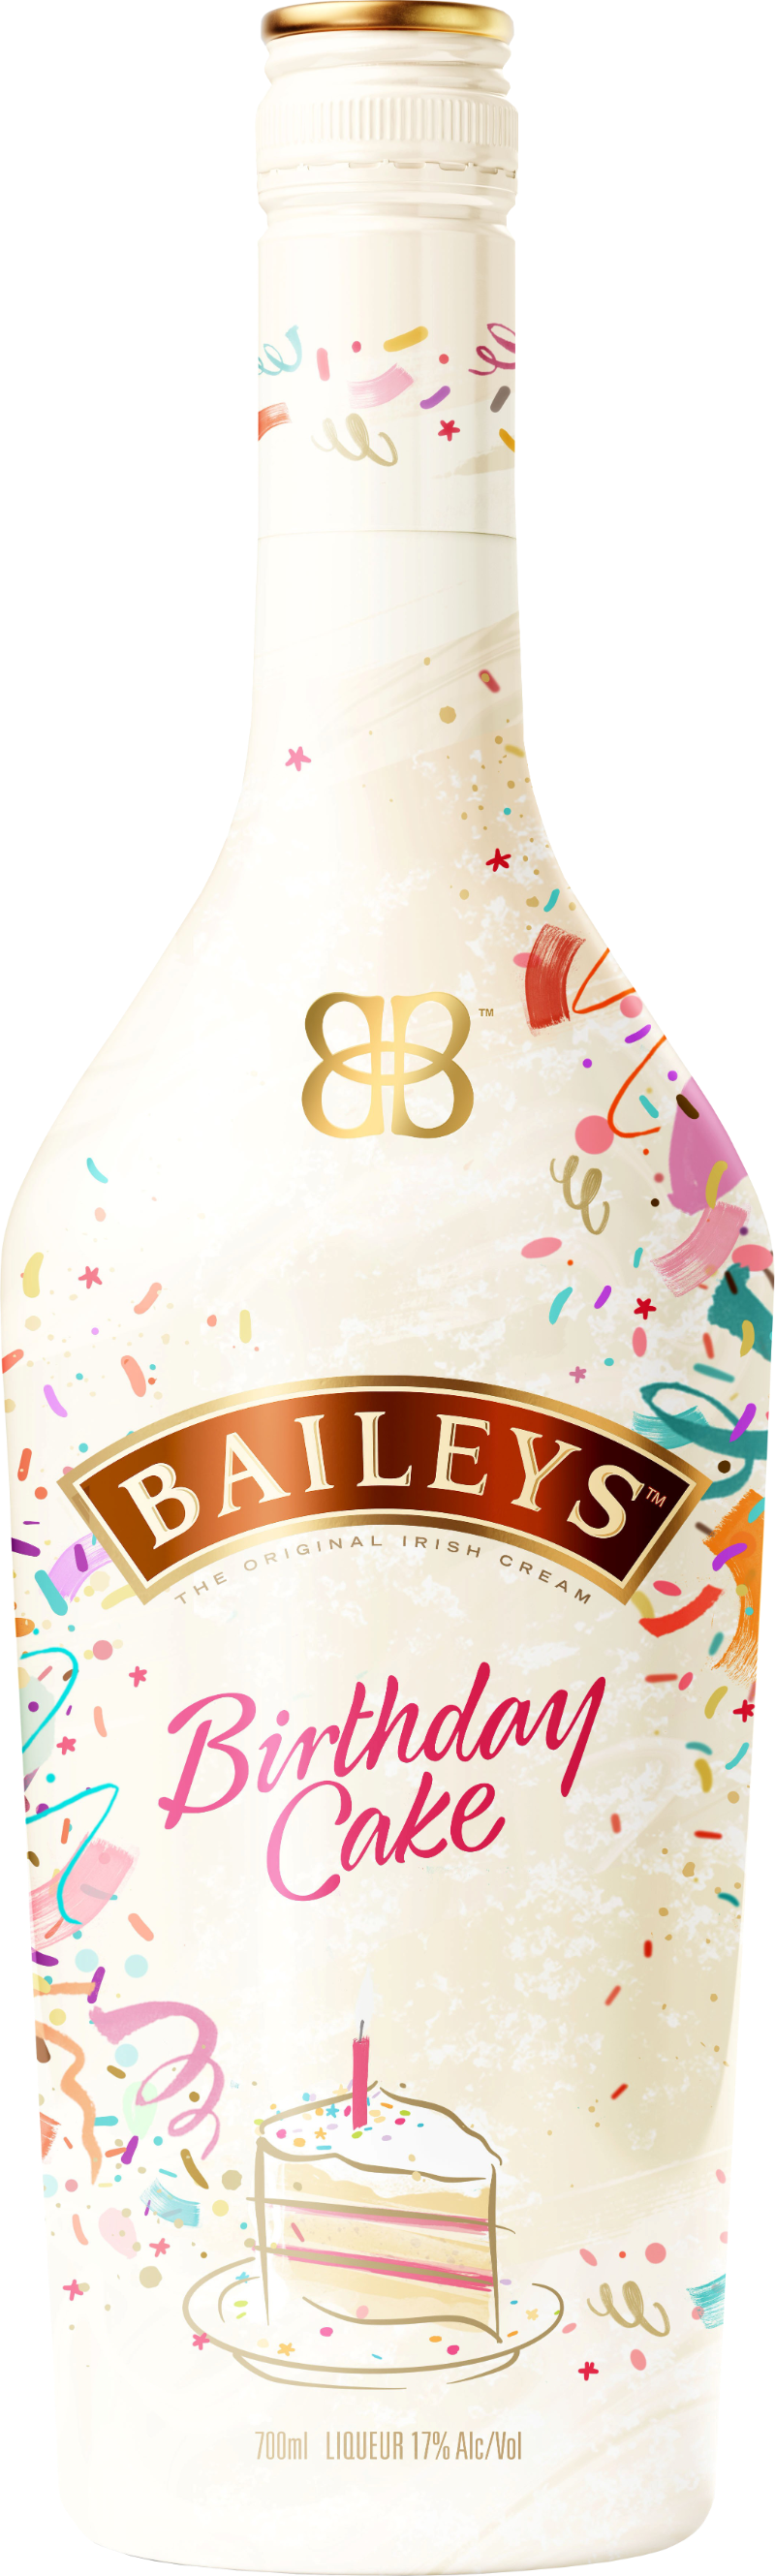 Cake Birthday cl 70 - vol Baileys 17%